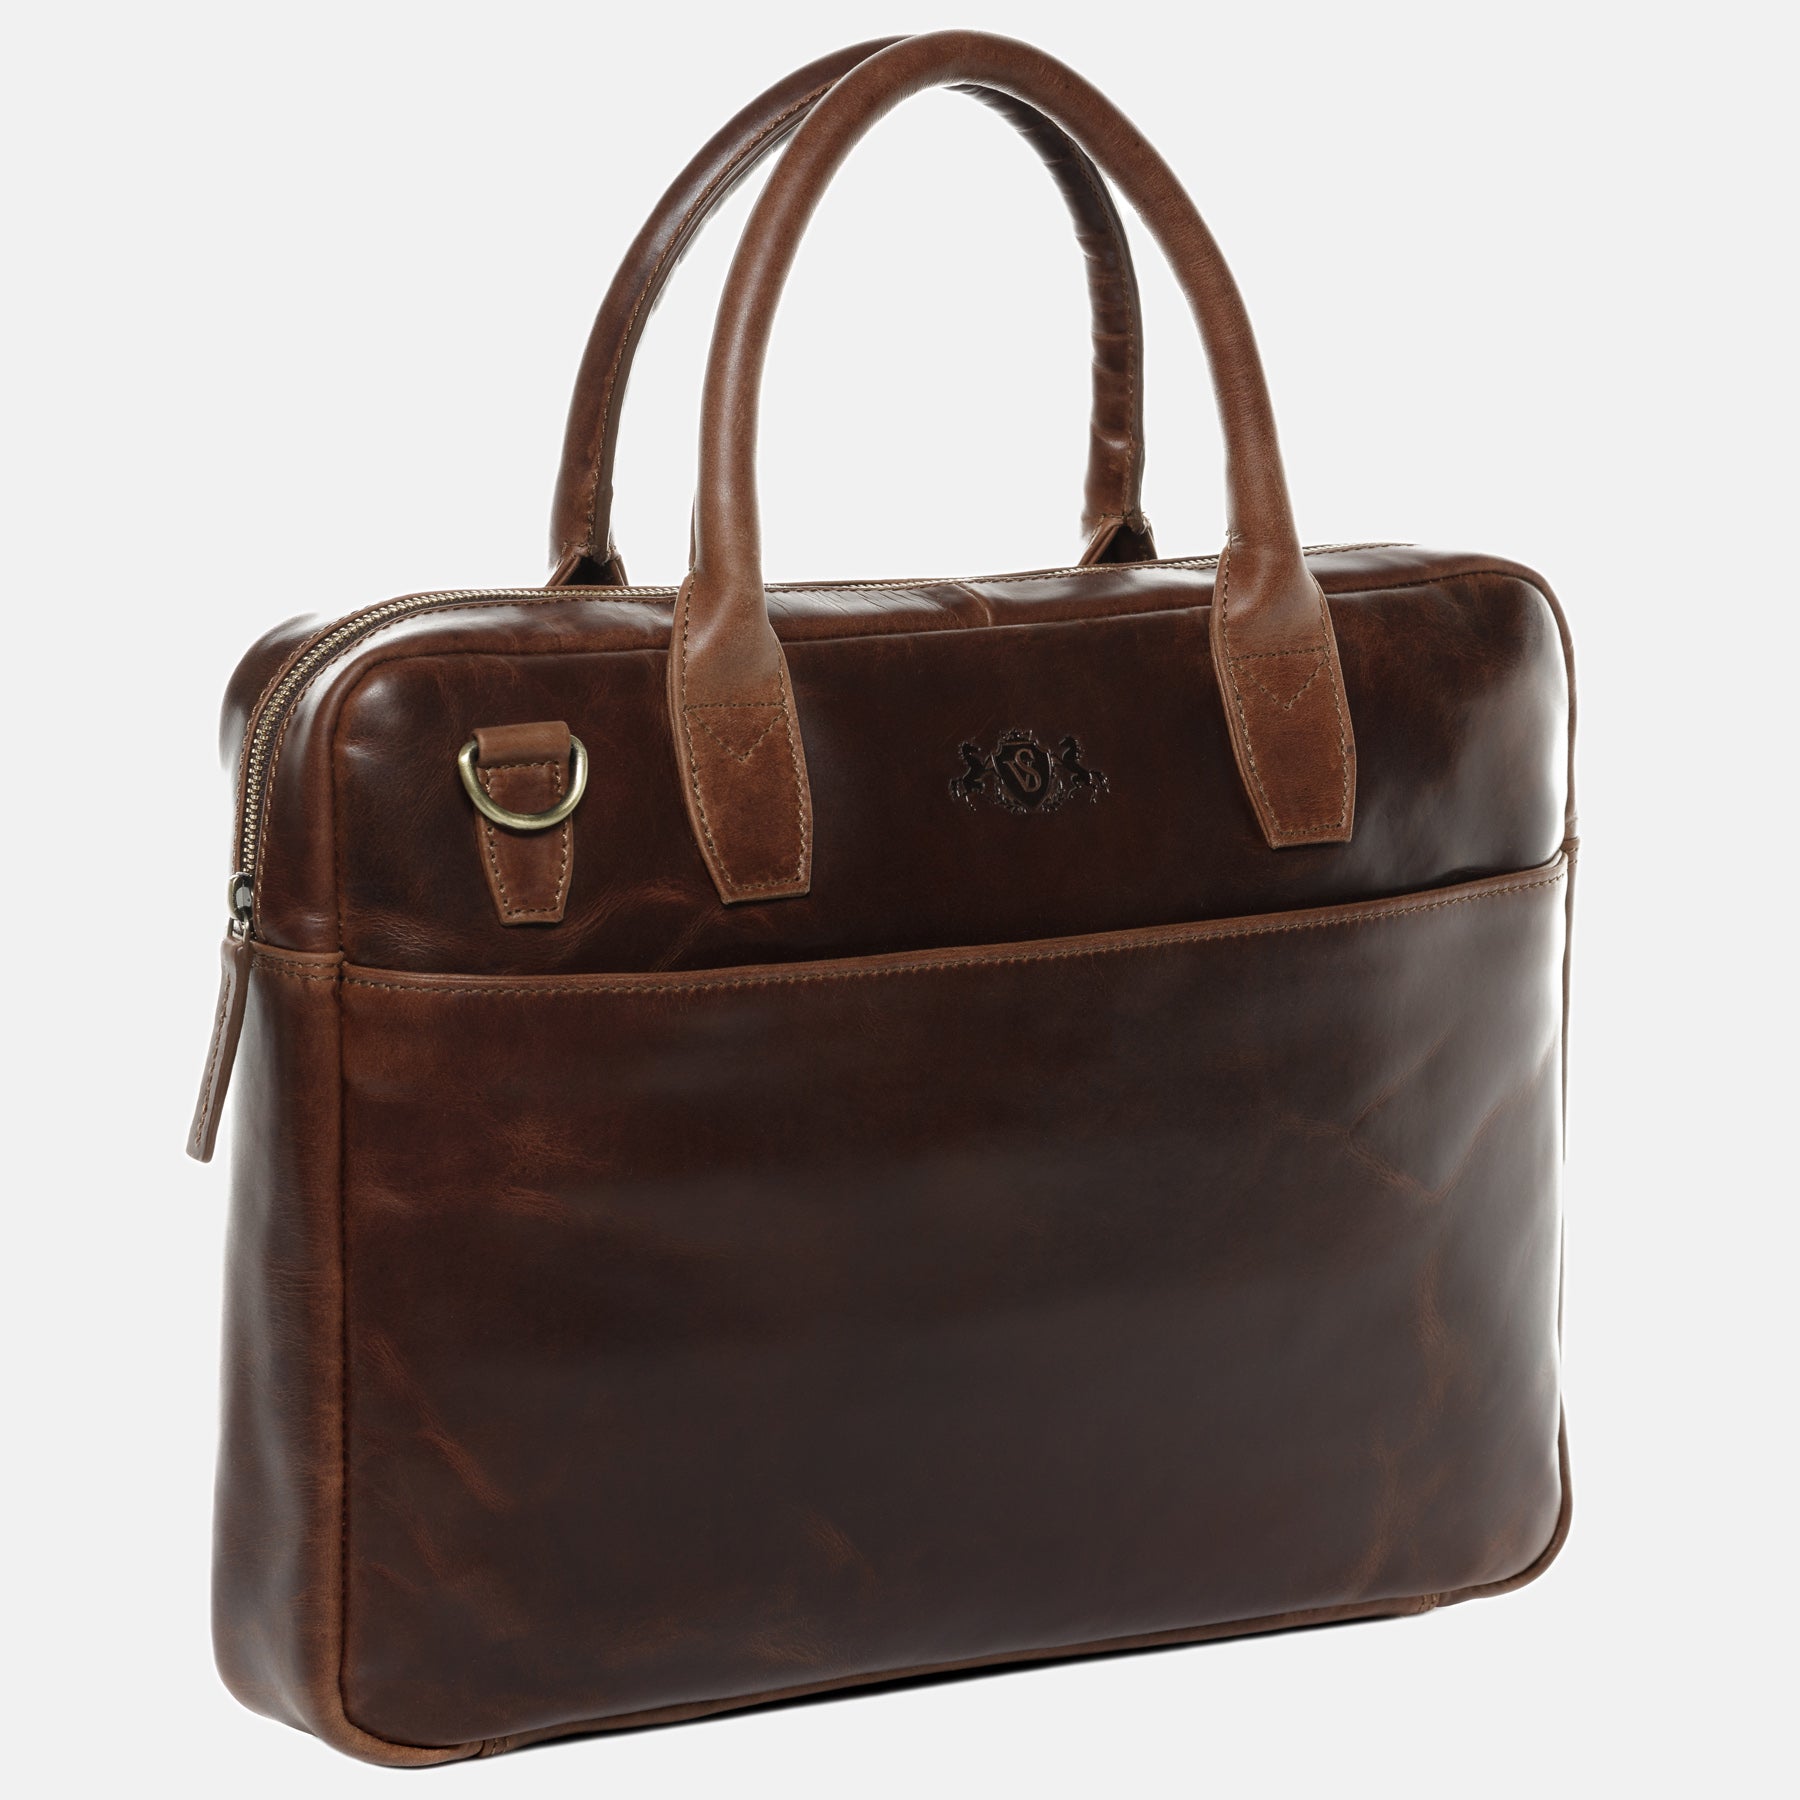 Laptop bag BOSTON natural leather brown-cognac